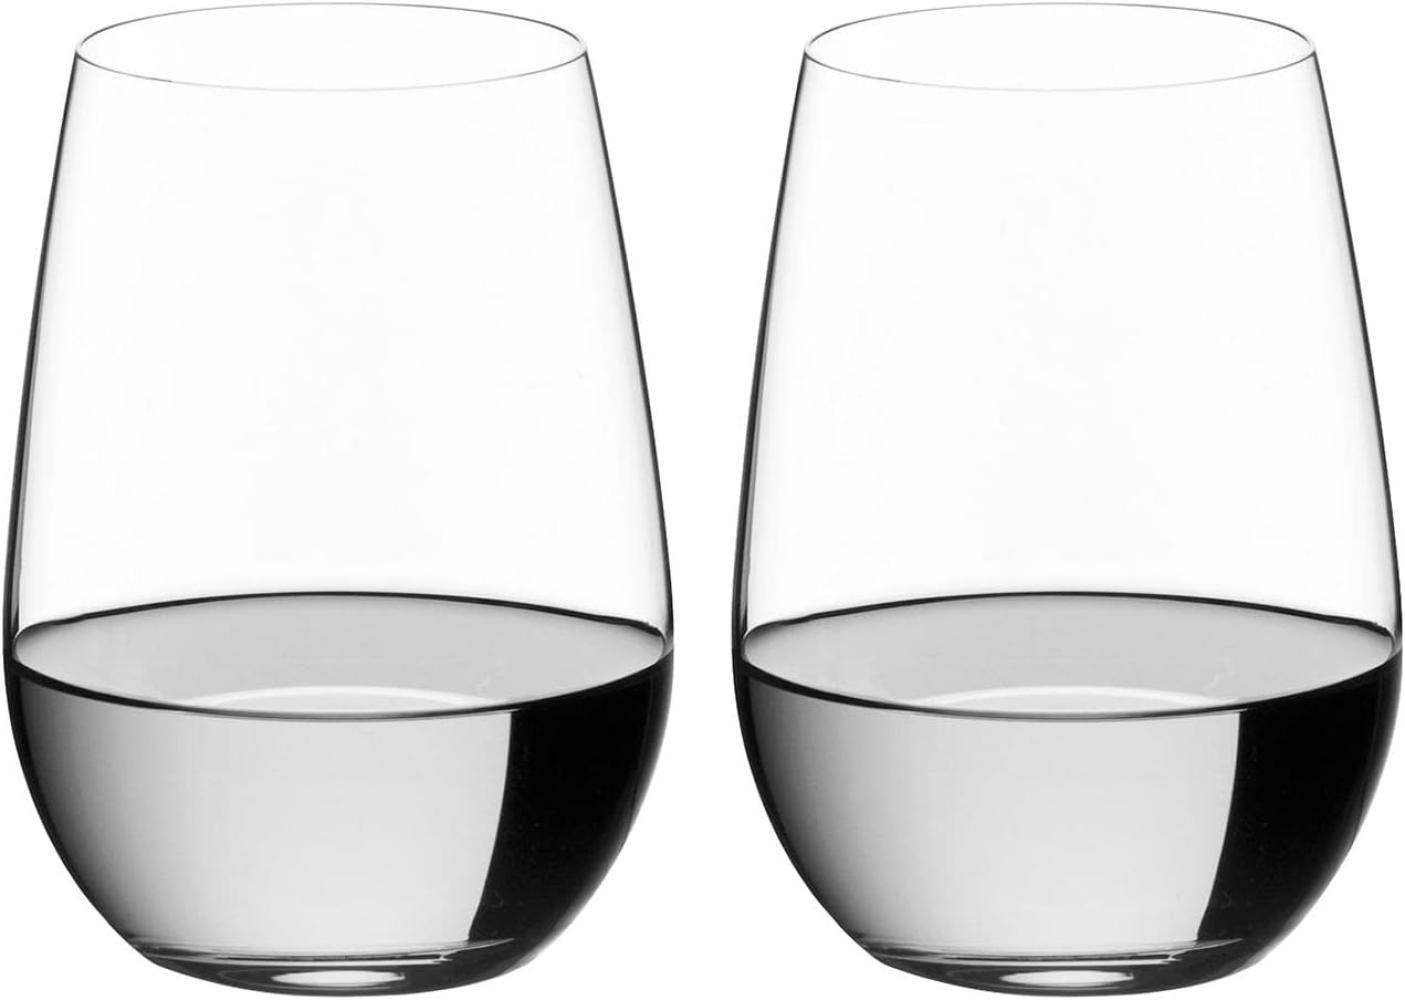 Riedel O Cabernet / Merlot, Rotweinglas, Weinglas, hochwertiges Glas, 600 ml, 2er Set, 0414/0 Bild 1